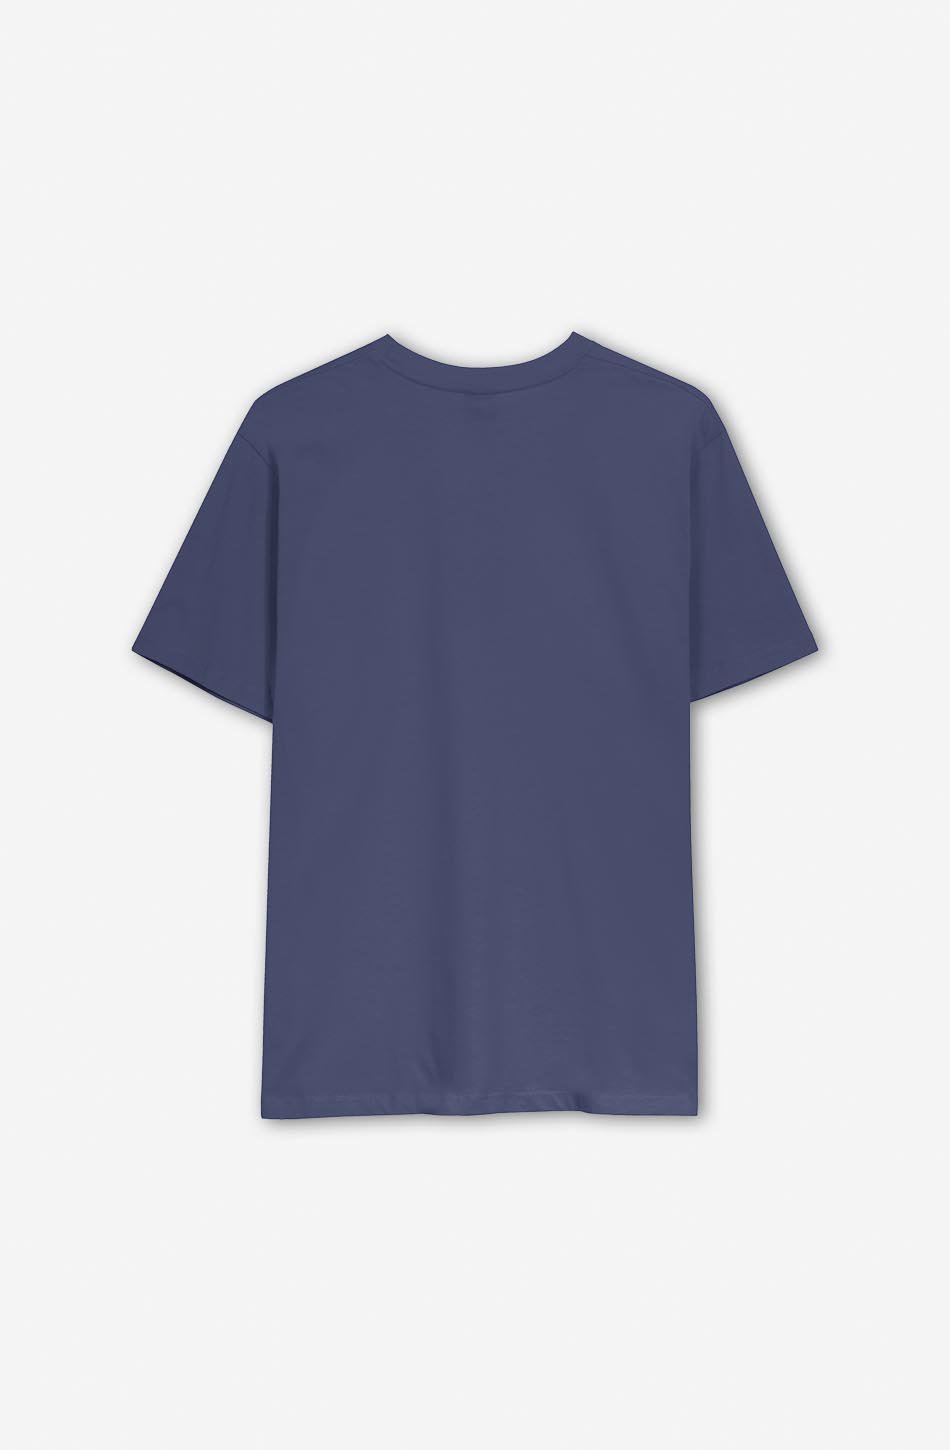 Camiseta Bastian Navy